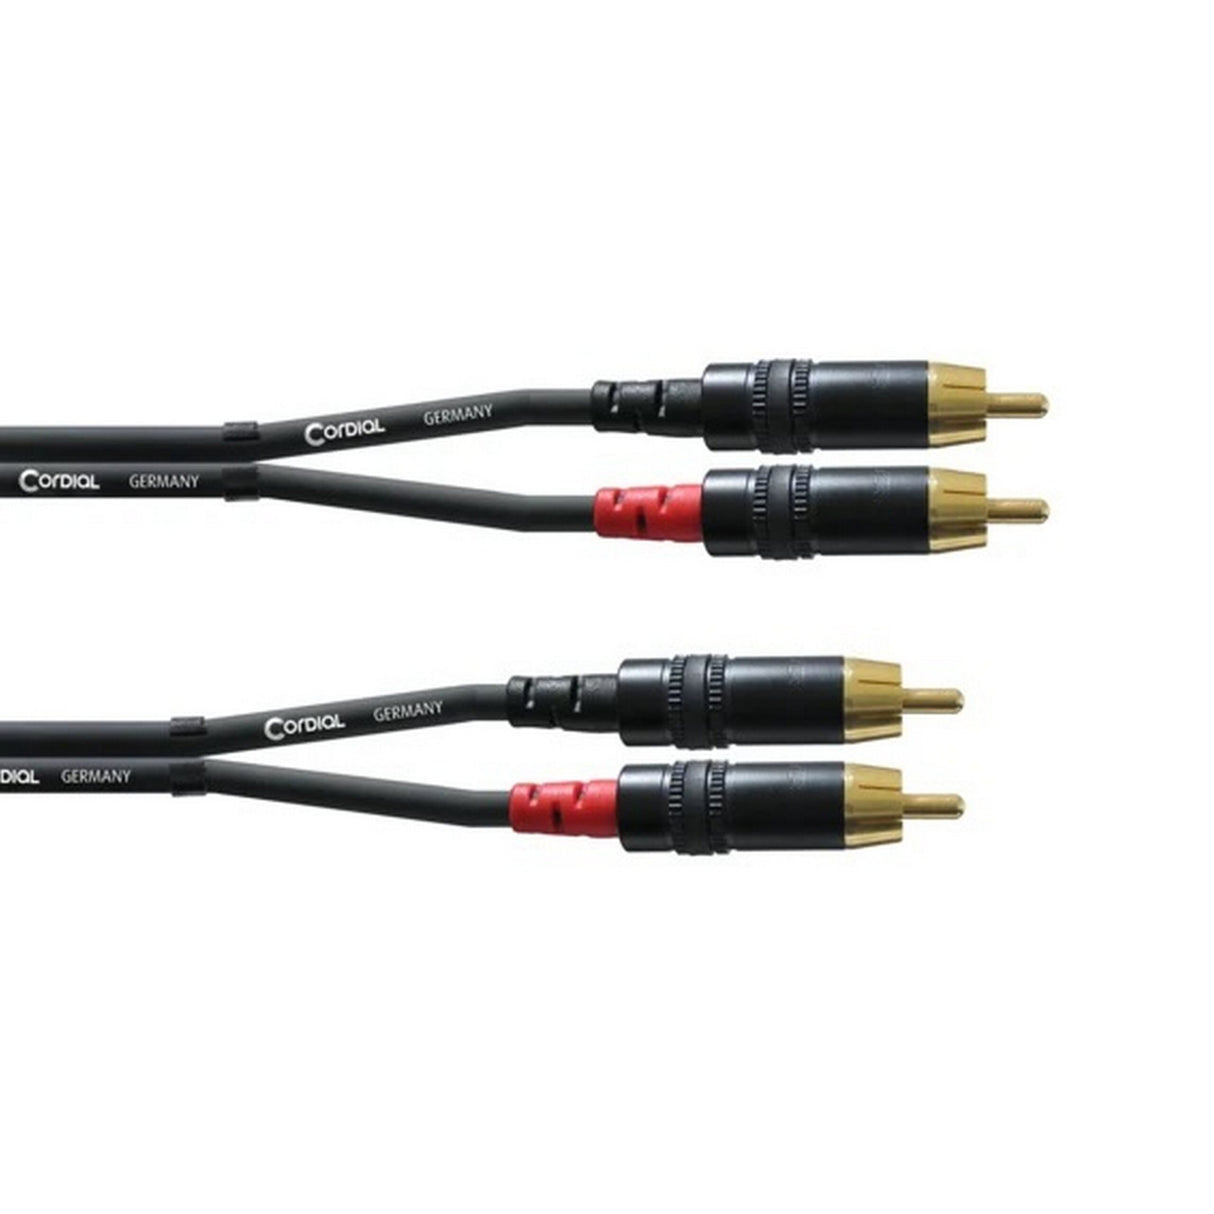 Cordial CFU 6 CC 2 x RCA to 2 x RCA Twin Cable/Adapter, Black, 20-Feet